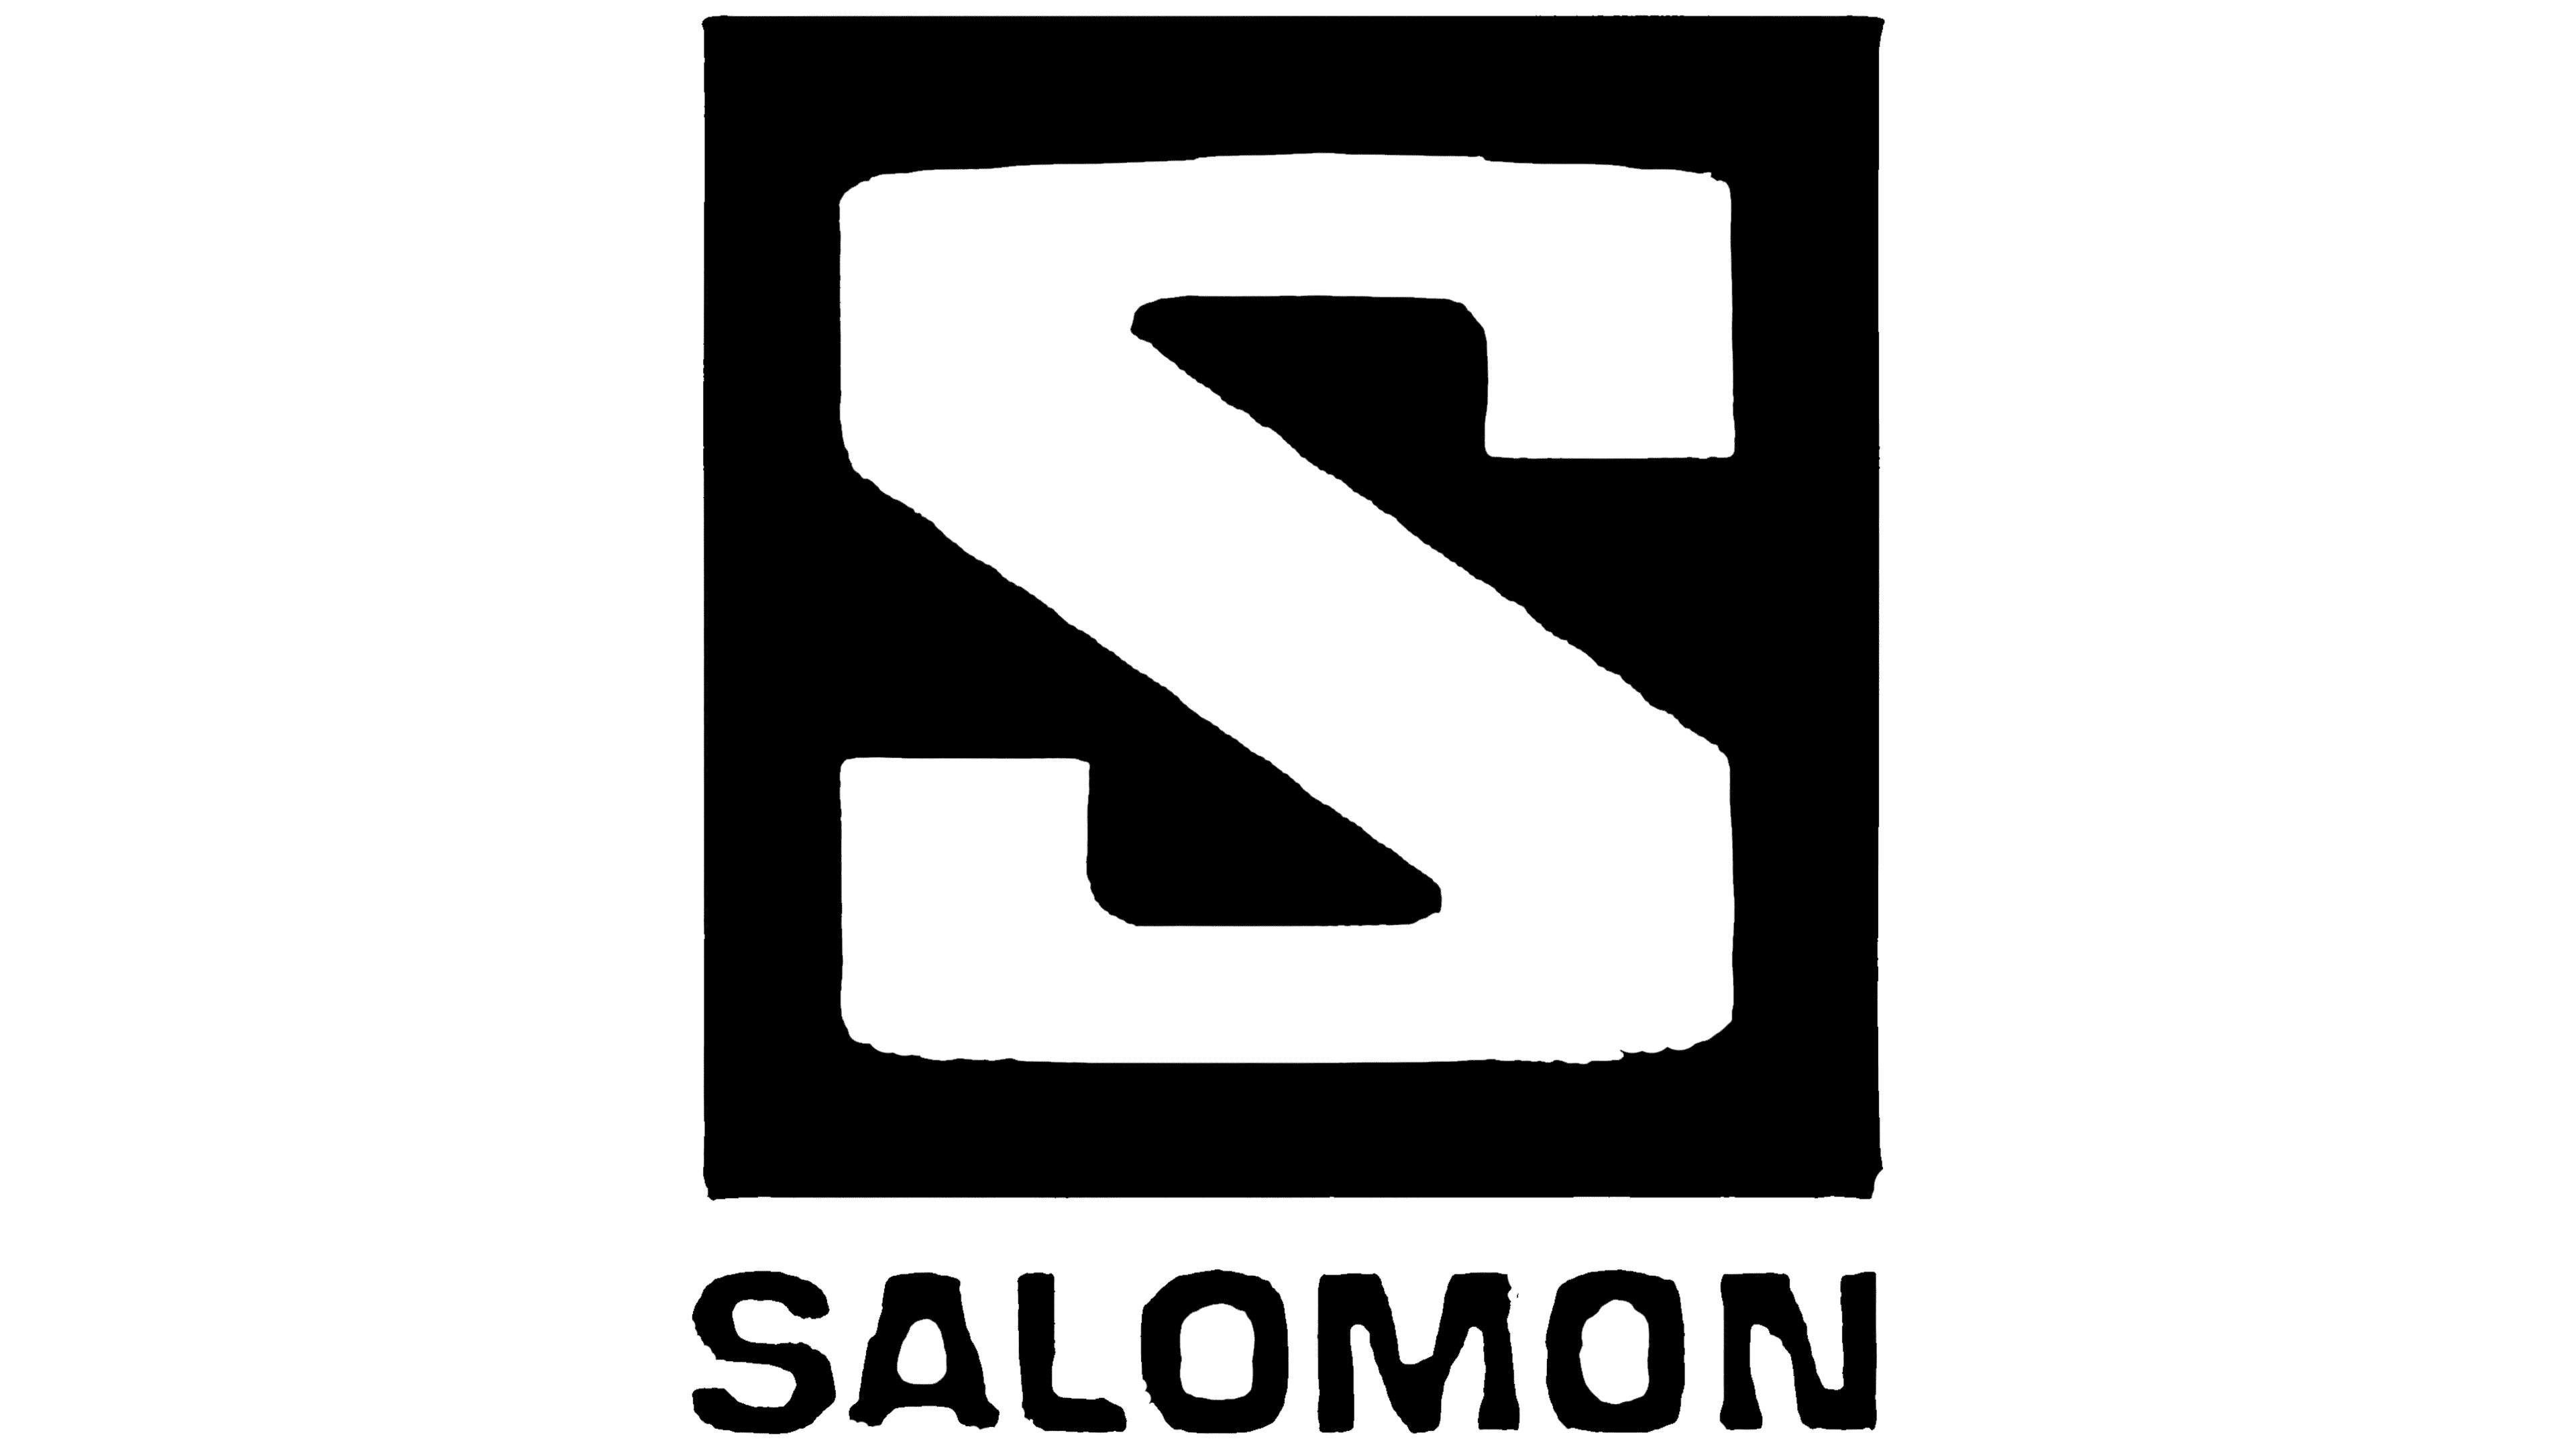 Share 156+ salomon logo super hot - highschoolcanada.edu.vn